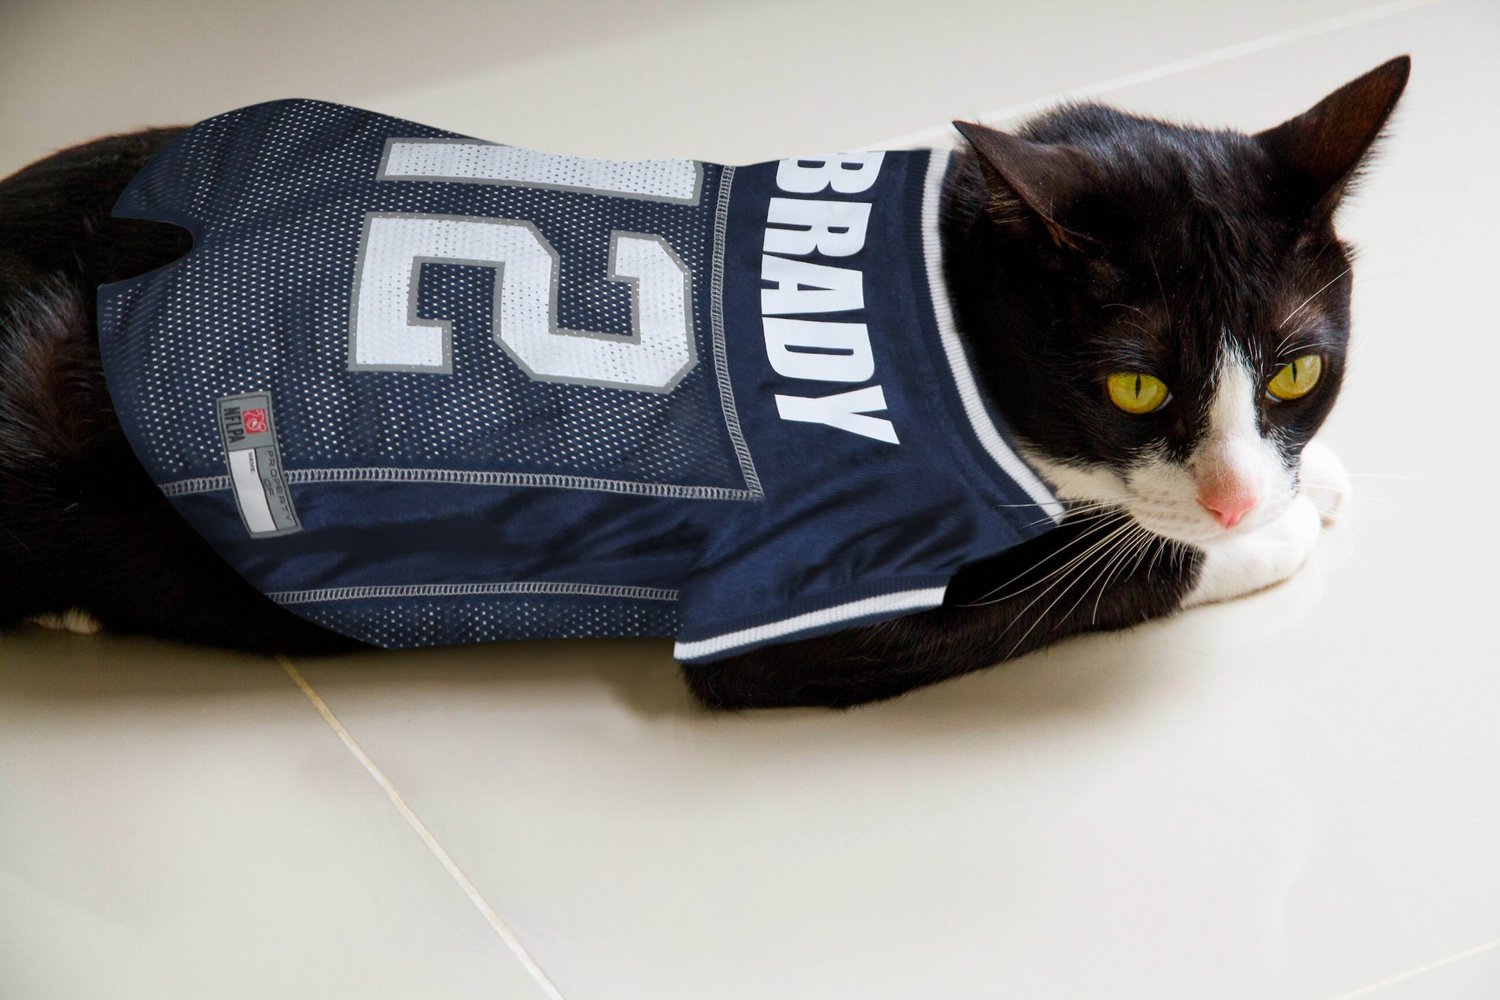 cat patriots jersey